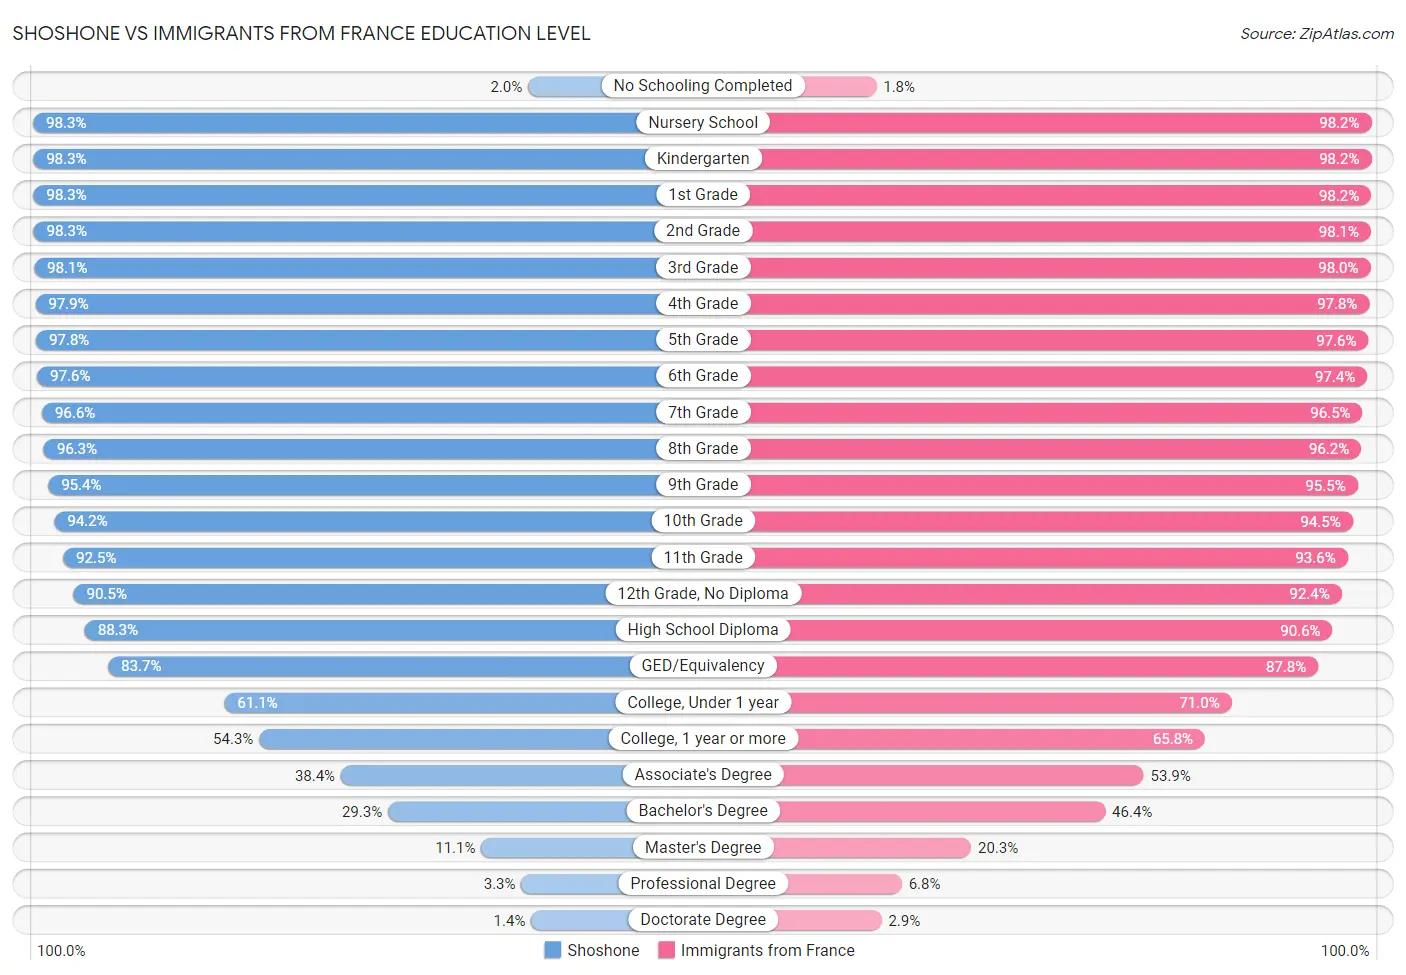 Shoshone vs Immigrants from France Education Level